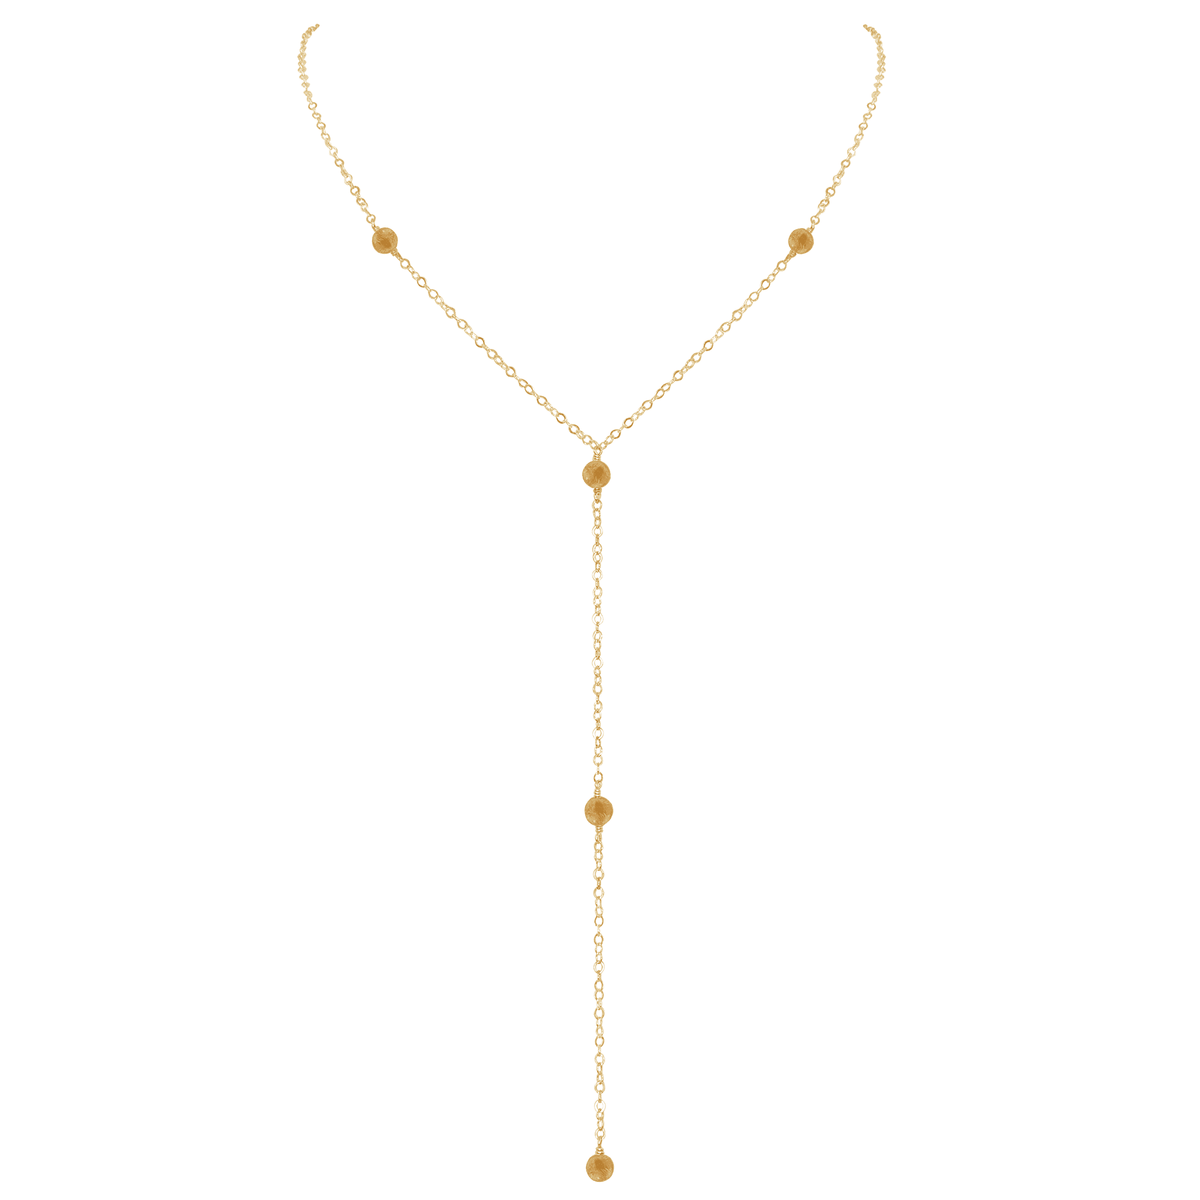 Dainty Citrine Lariat Necklace - Dainty Citrine Lariat Necklace - 14k Gold Fill - Luna Tide Handmade Crystal Jewellery